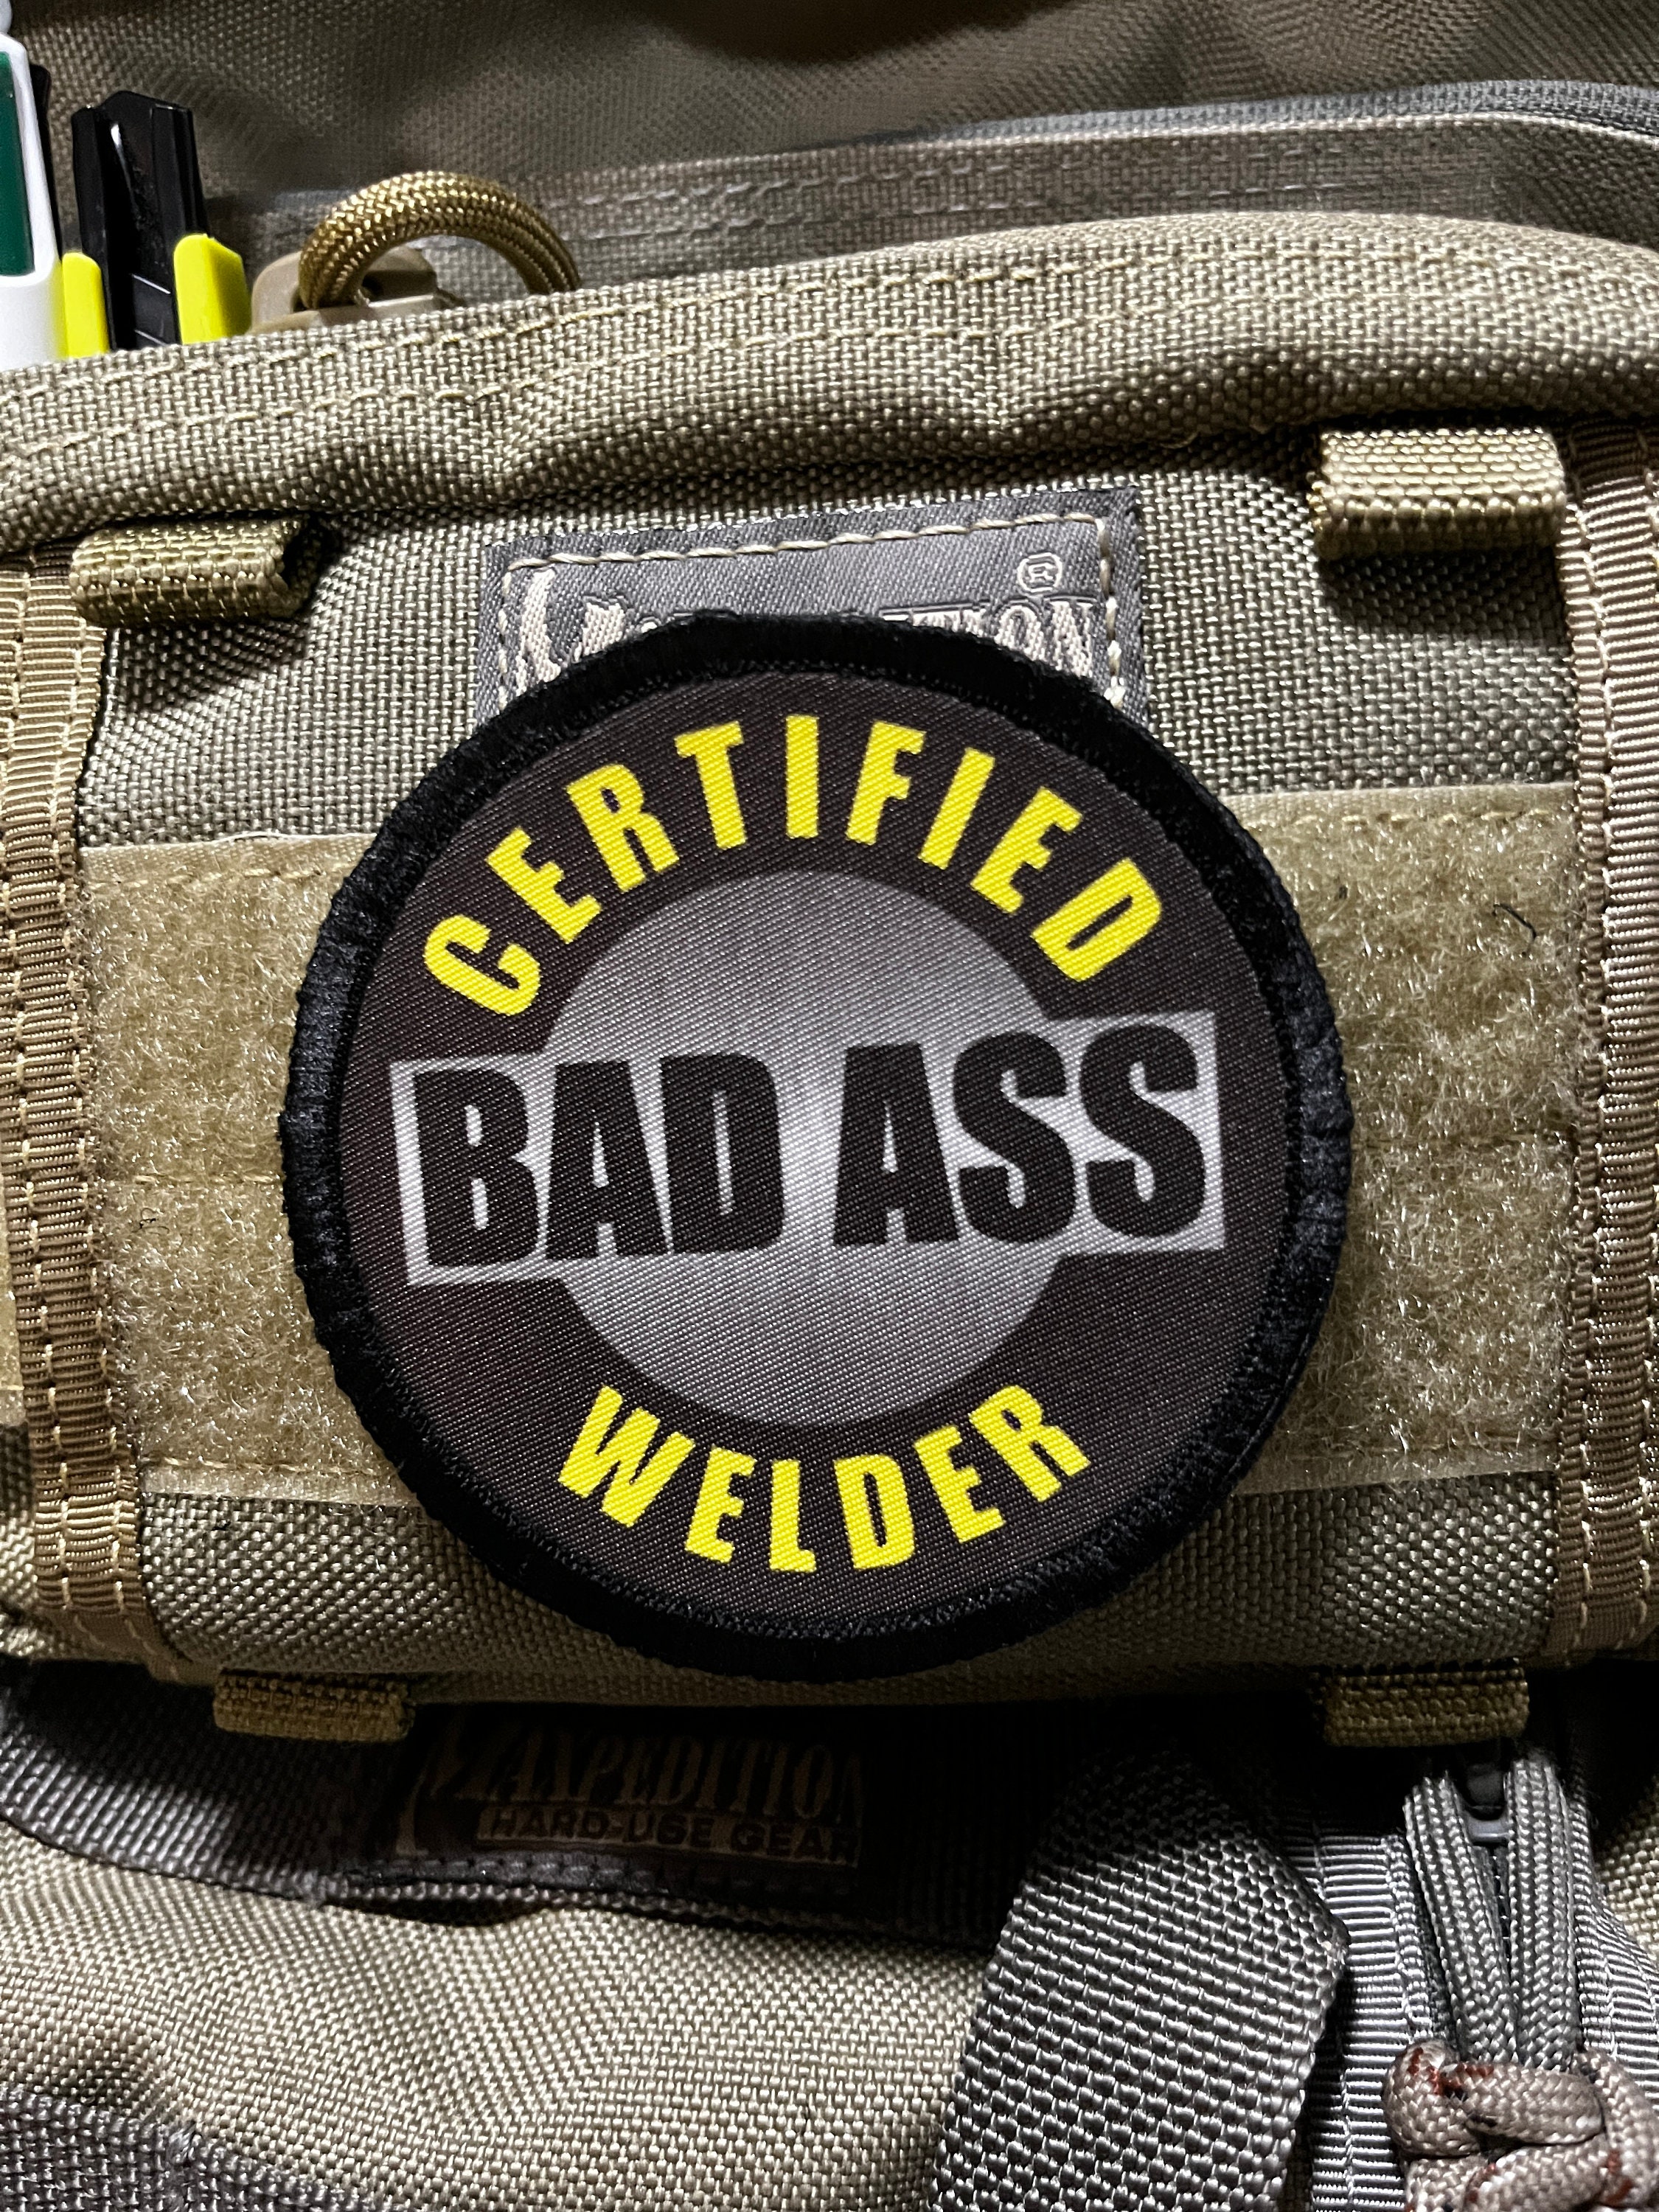 Certified badass welder for sale  